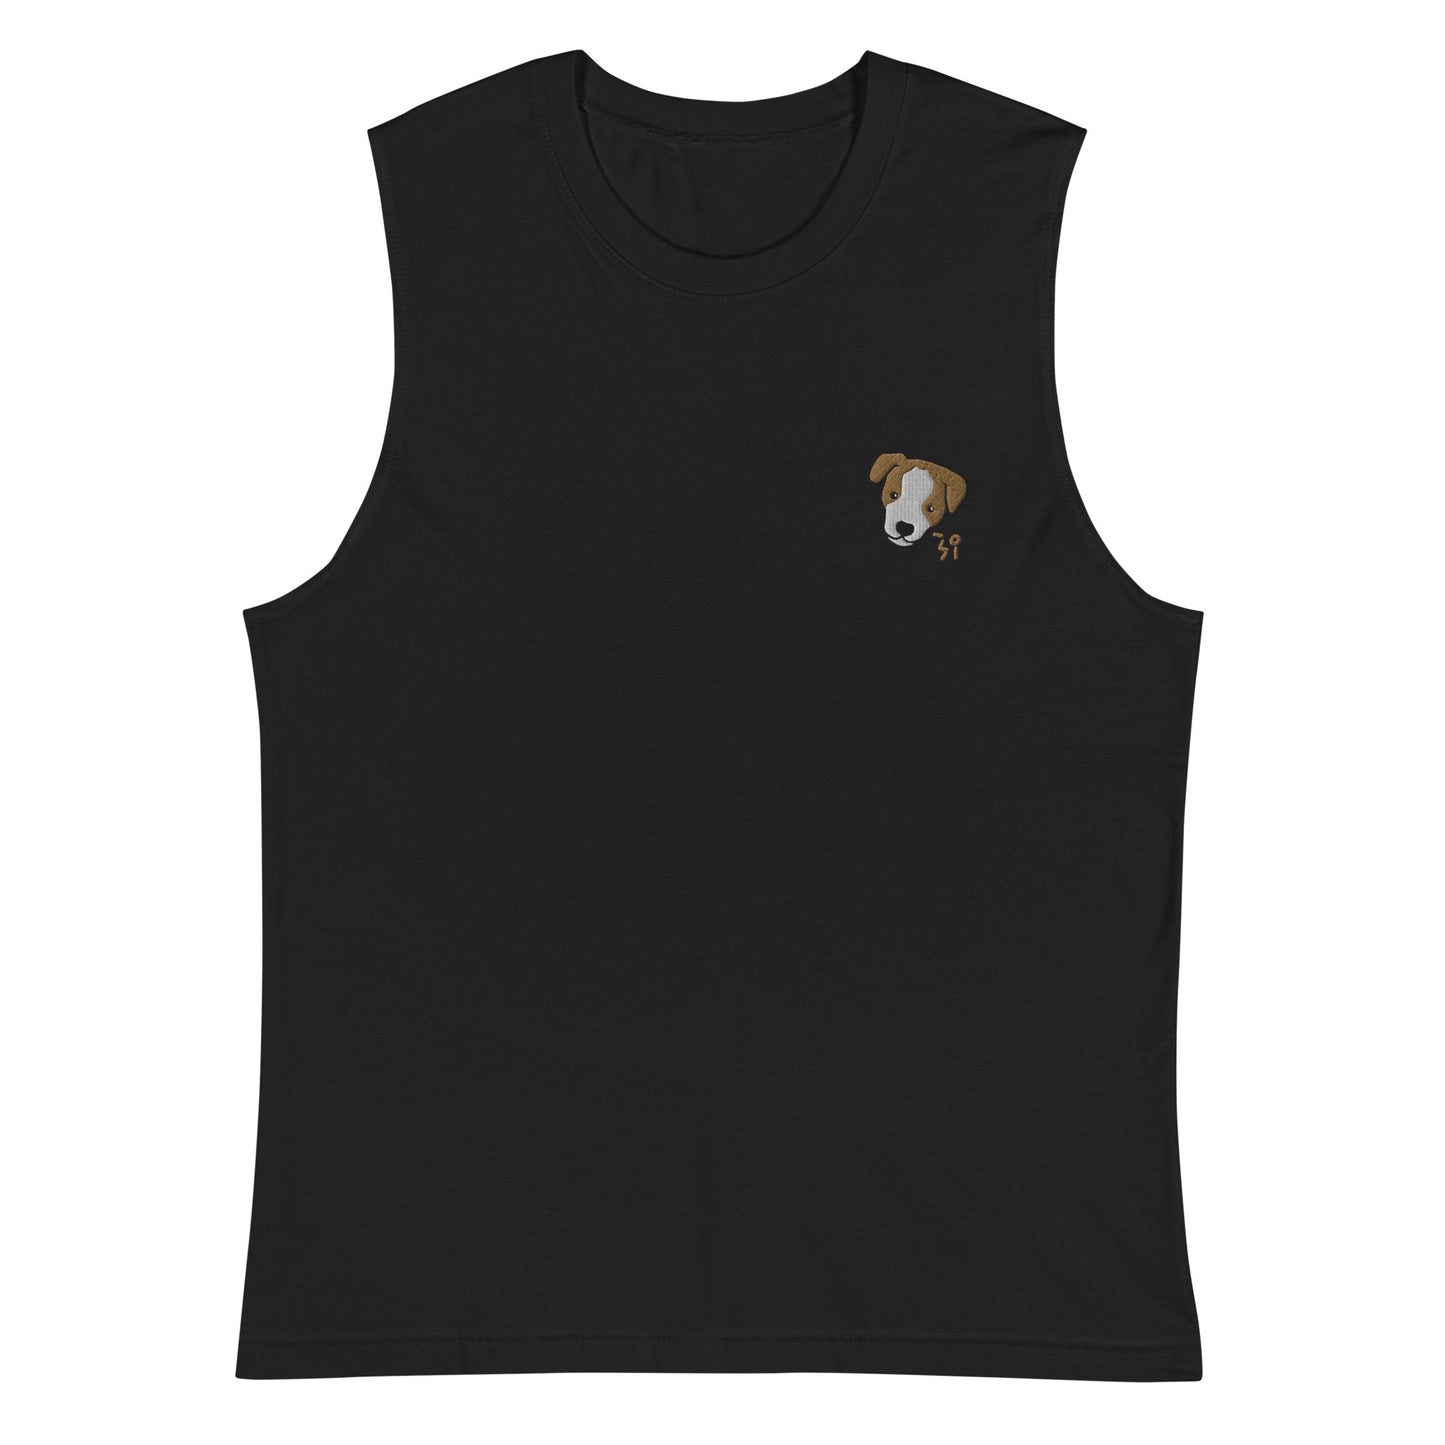 Jack Russell Terrier Muscle Shirt